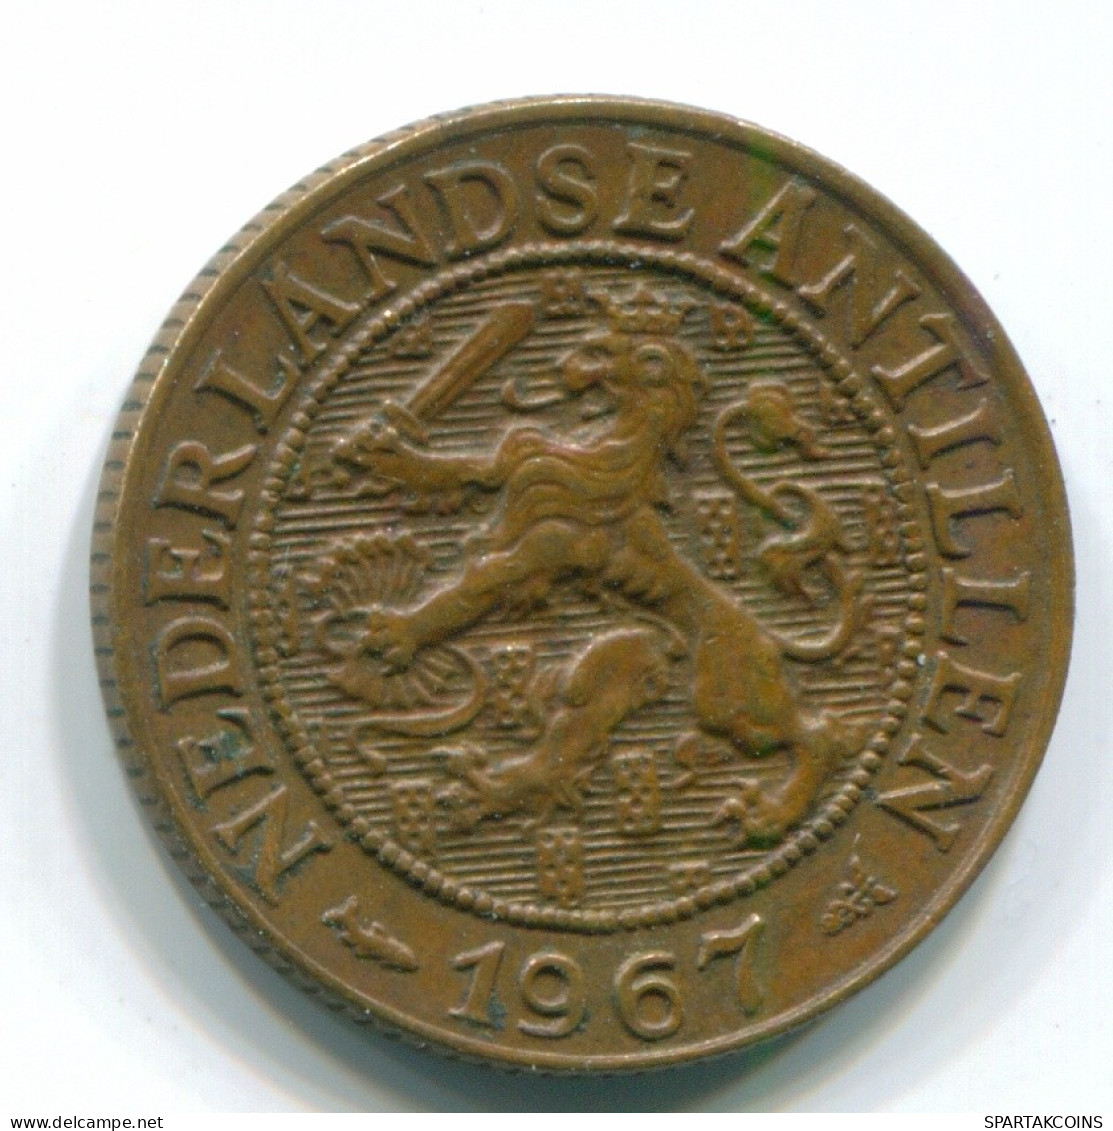 1 CENT 1967 NIEDERLÄNDISCHE ANTILLEN Bronze Fish Koloniale Münze #S11139.D.A - Netherlands Antilles